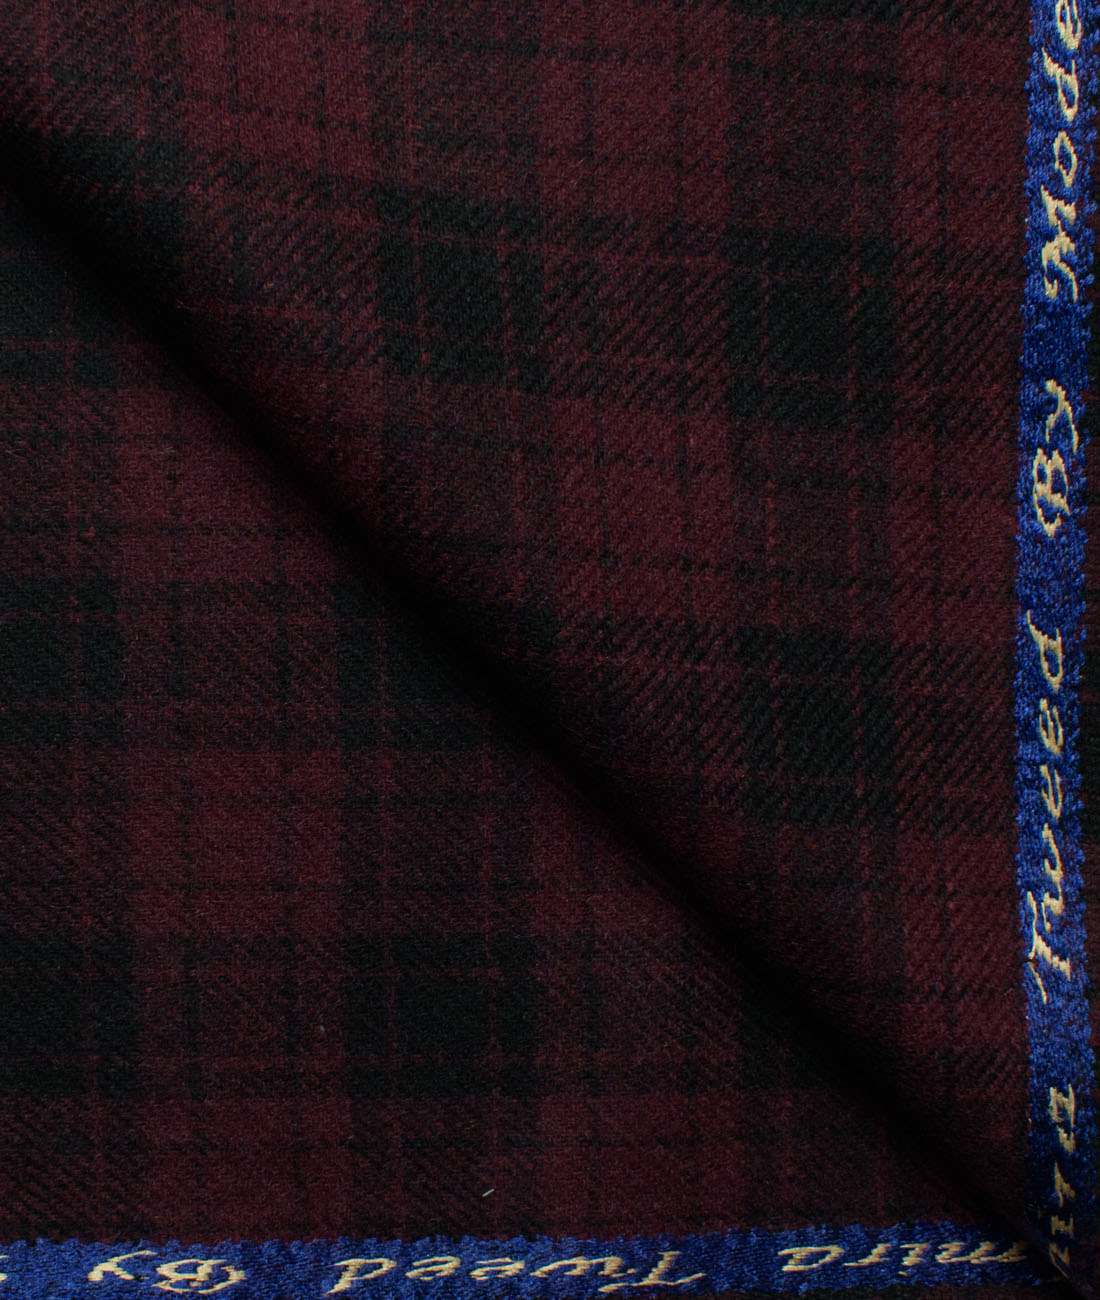 Modella Men's Acrylic Checks 2.25 Meter Unstitched Faux Tweed Jacketing & Blazer Fabric (Black & Maroon)